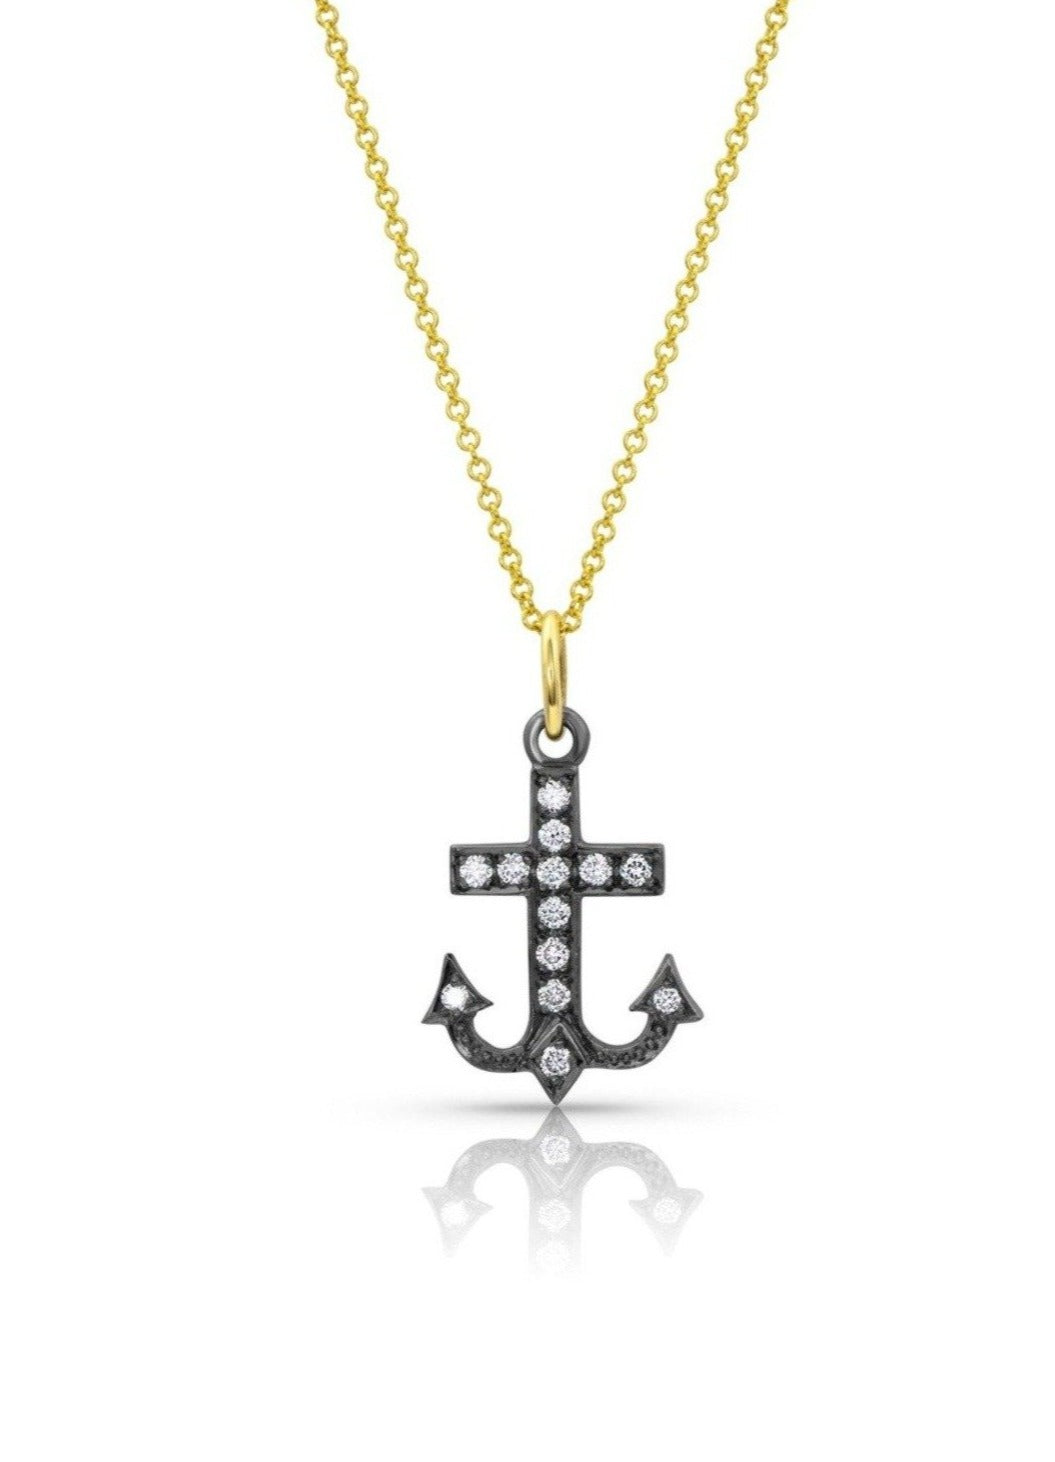 Gold and Diamond Cross Pendant - Goldhaus & Alexander Jewelry Design